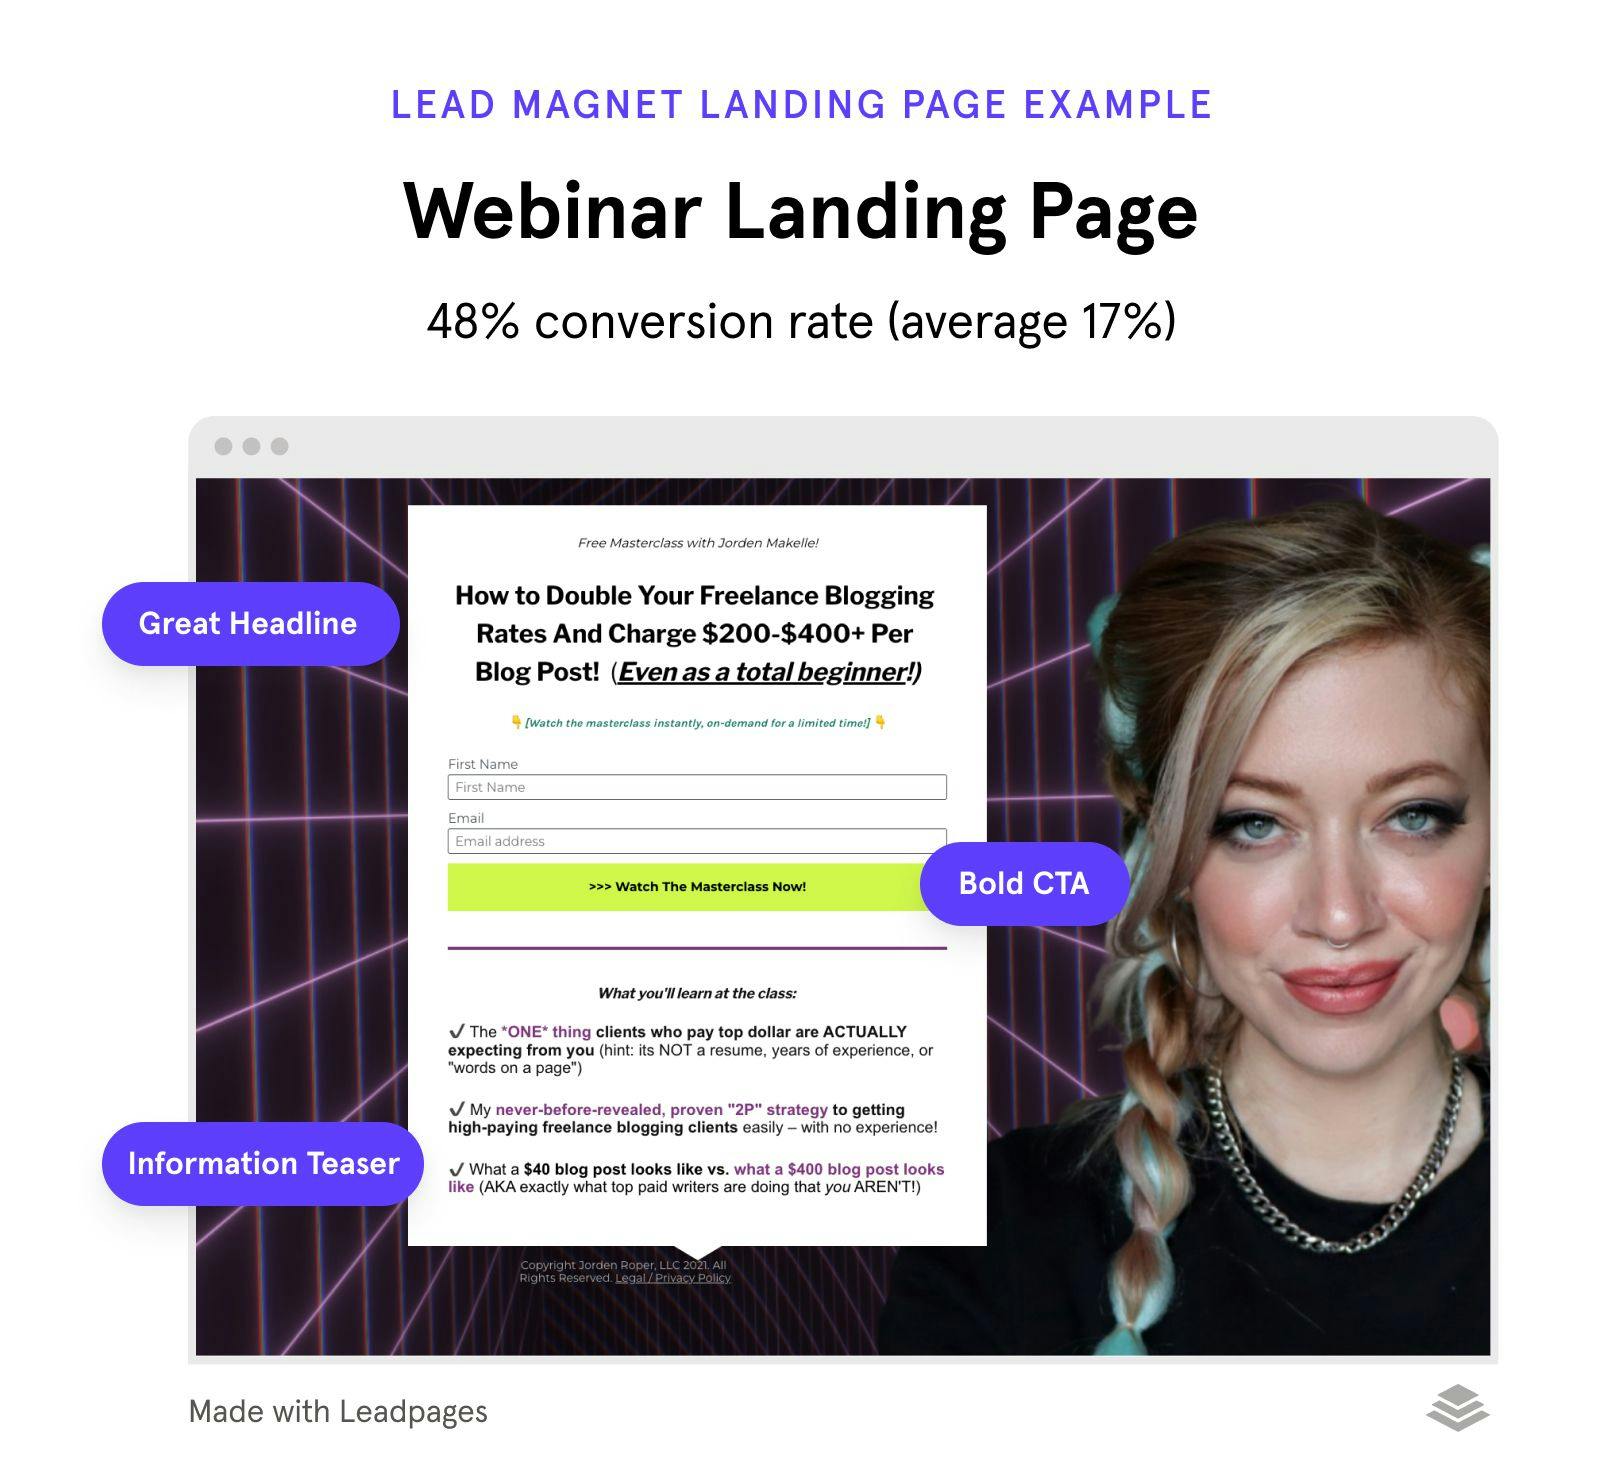 Webinar lead magnet landing page example